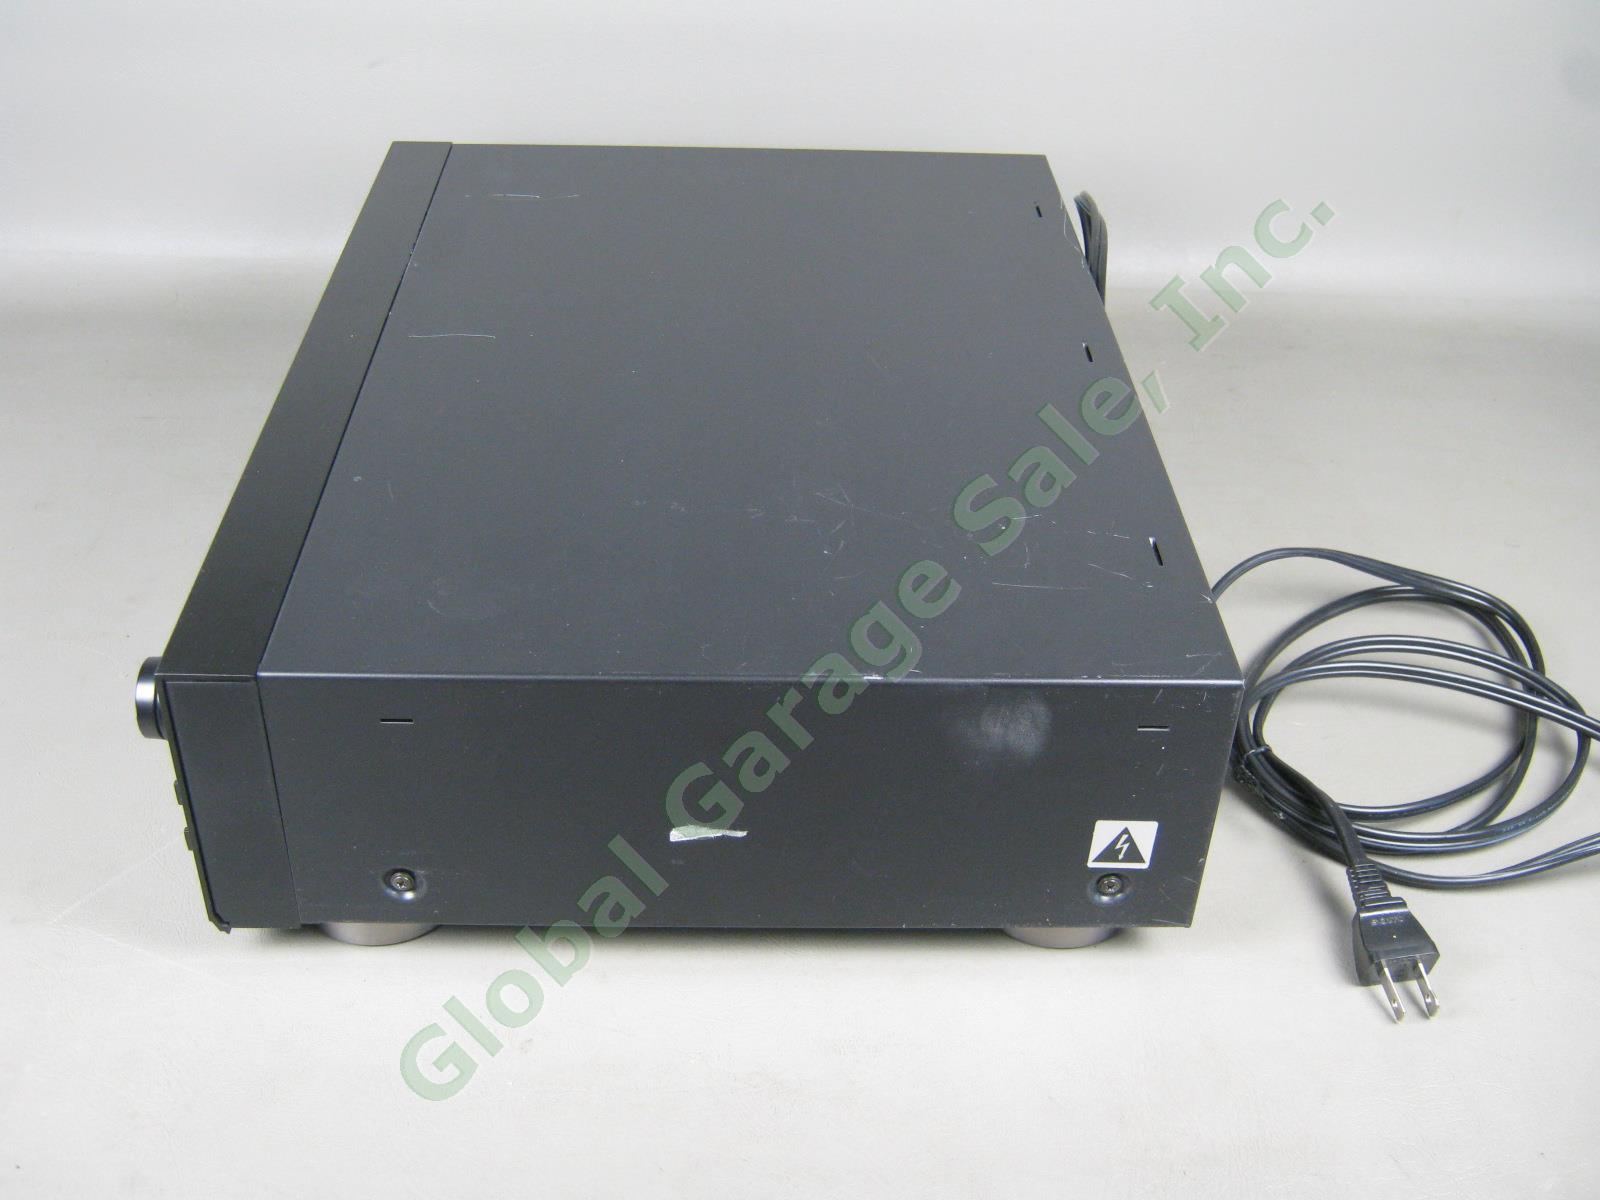 Sony DTC-700 DAT Digital Audio Tape Deck Recorder RM-D55A Remote Manual Bundle 3